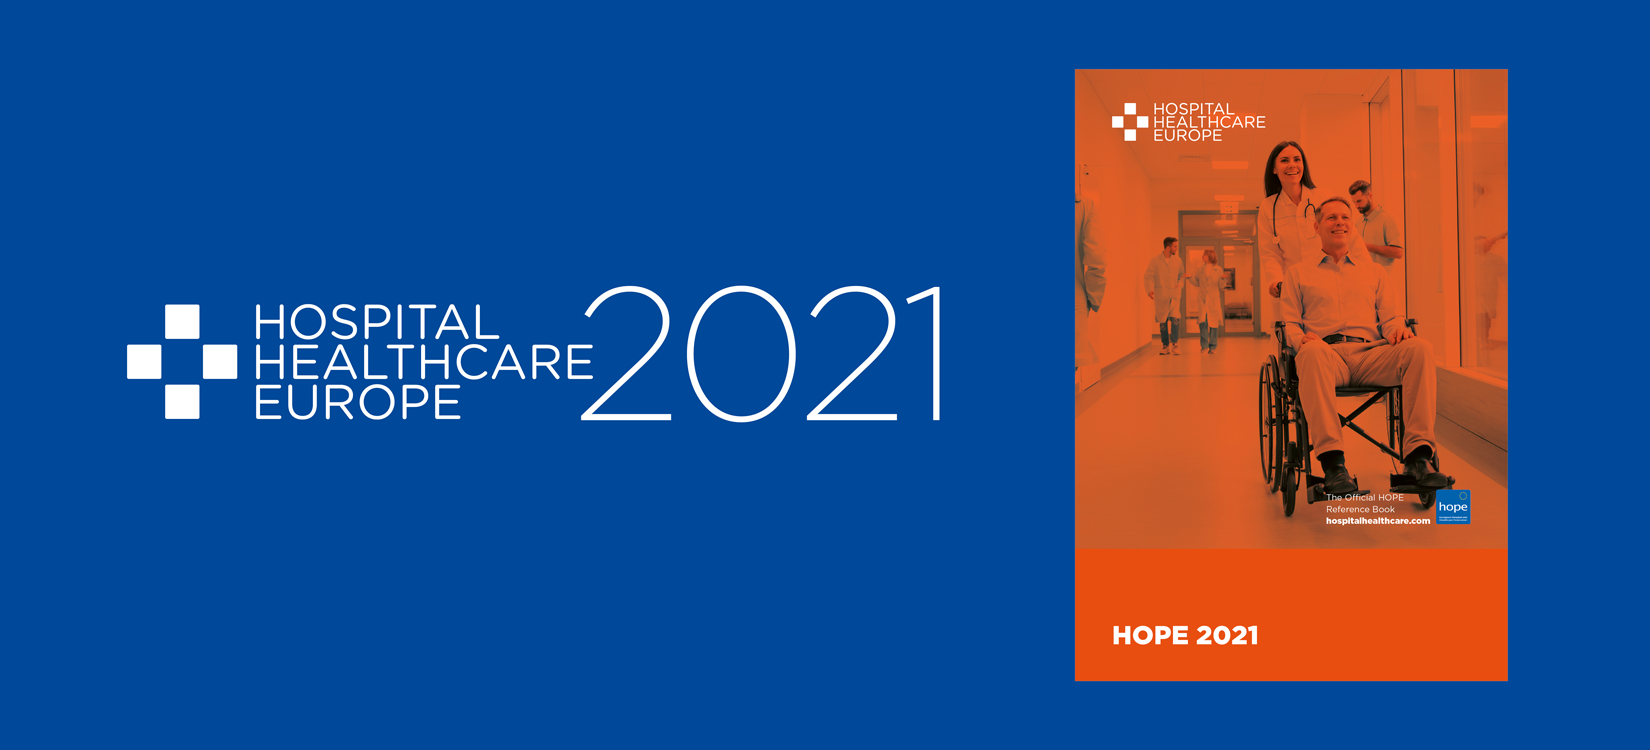 Hospital Healthcare Europe: HOPE